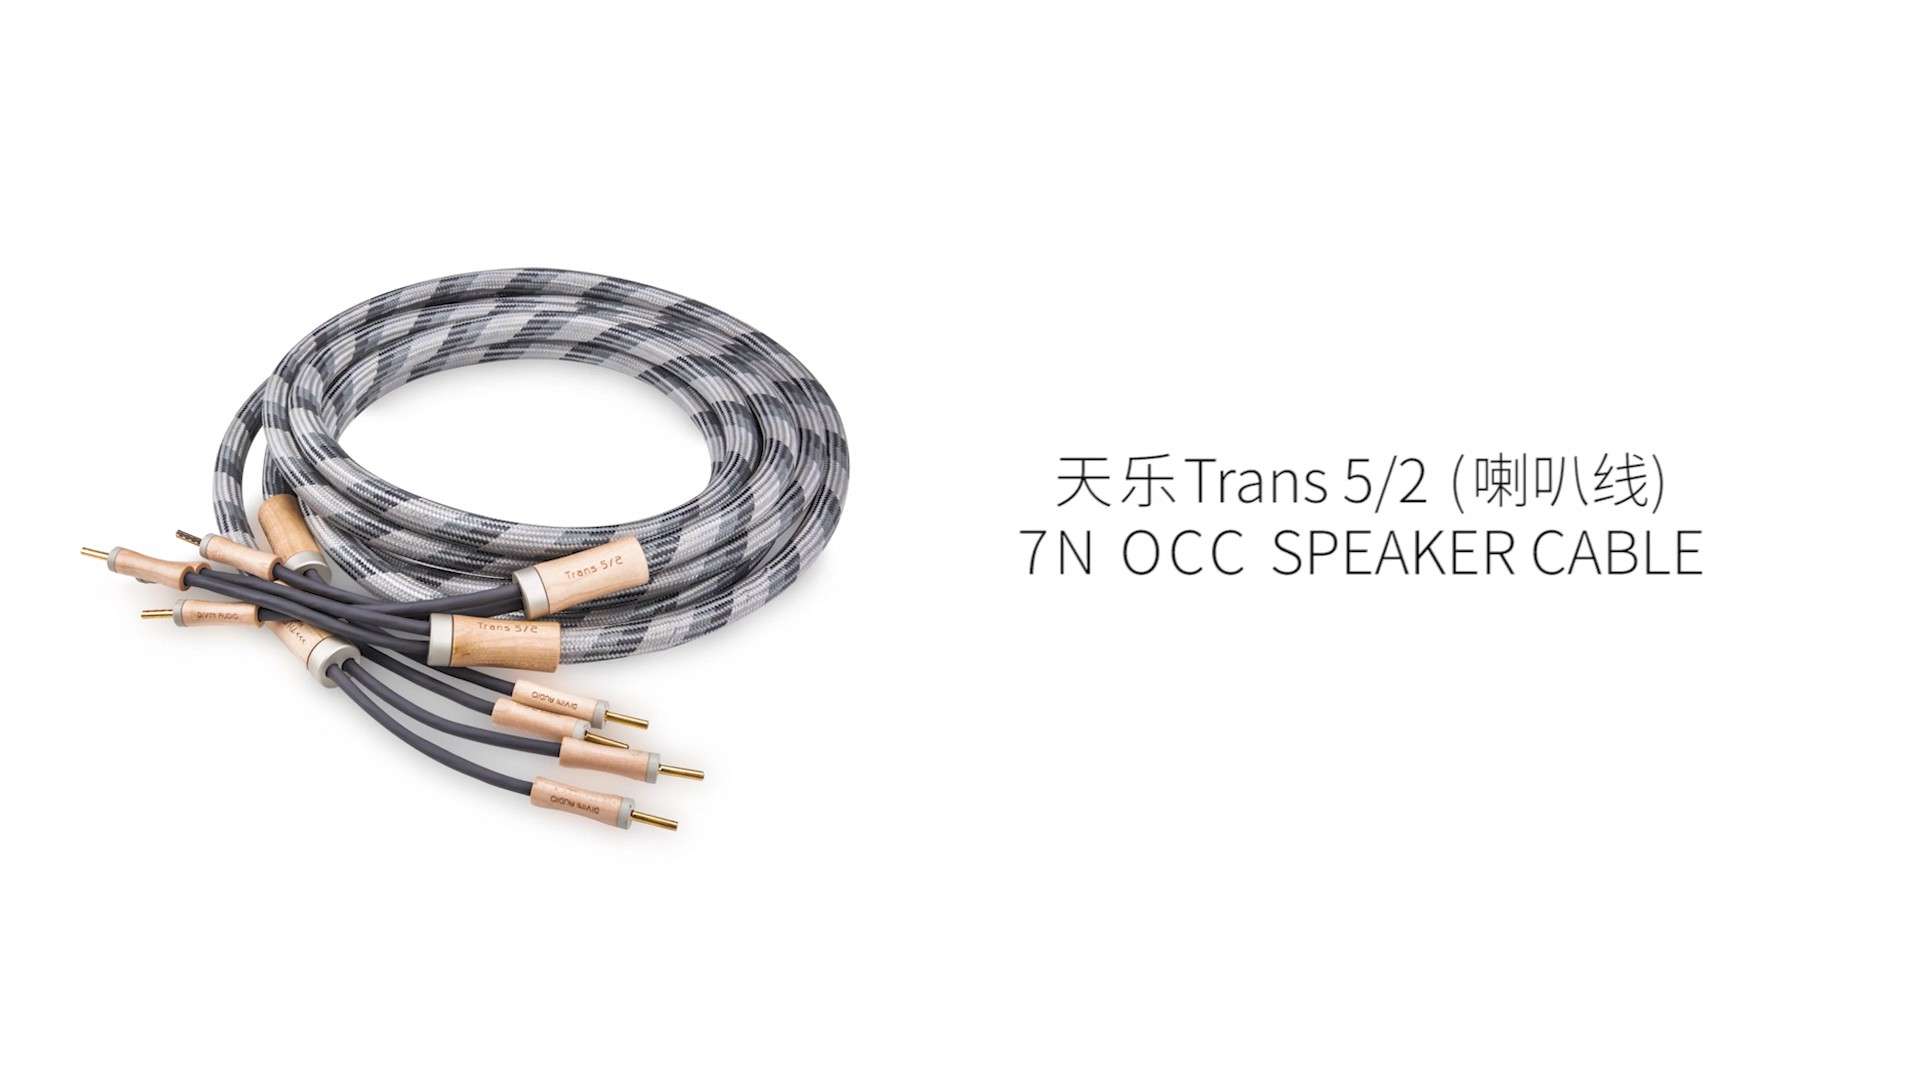 天乐Trans 5/2 7N OCC SPEAKER CABLE Hi-Fi喇叭线 - 电商短片